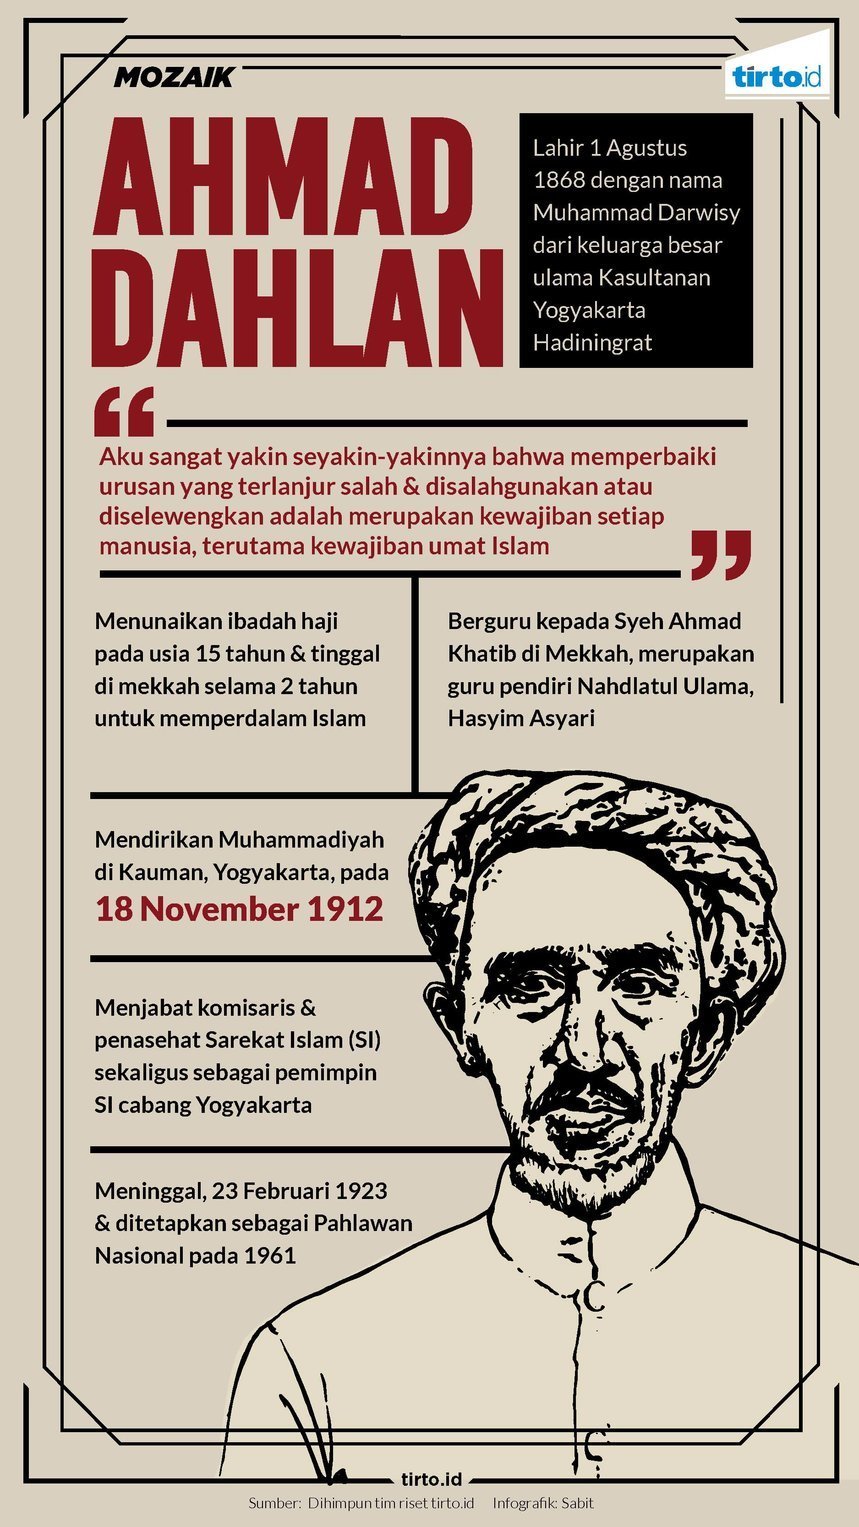 Infografik Mozaik Ahmad Dahlan